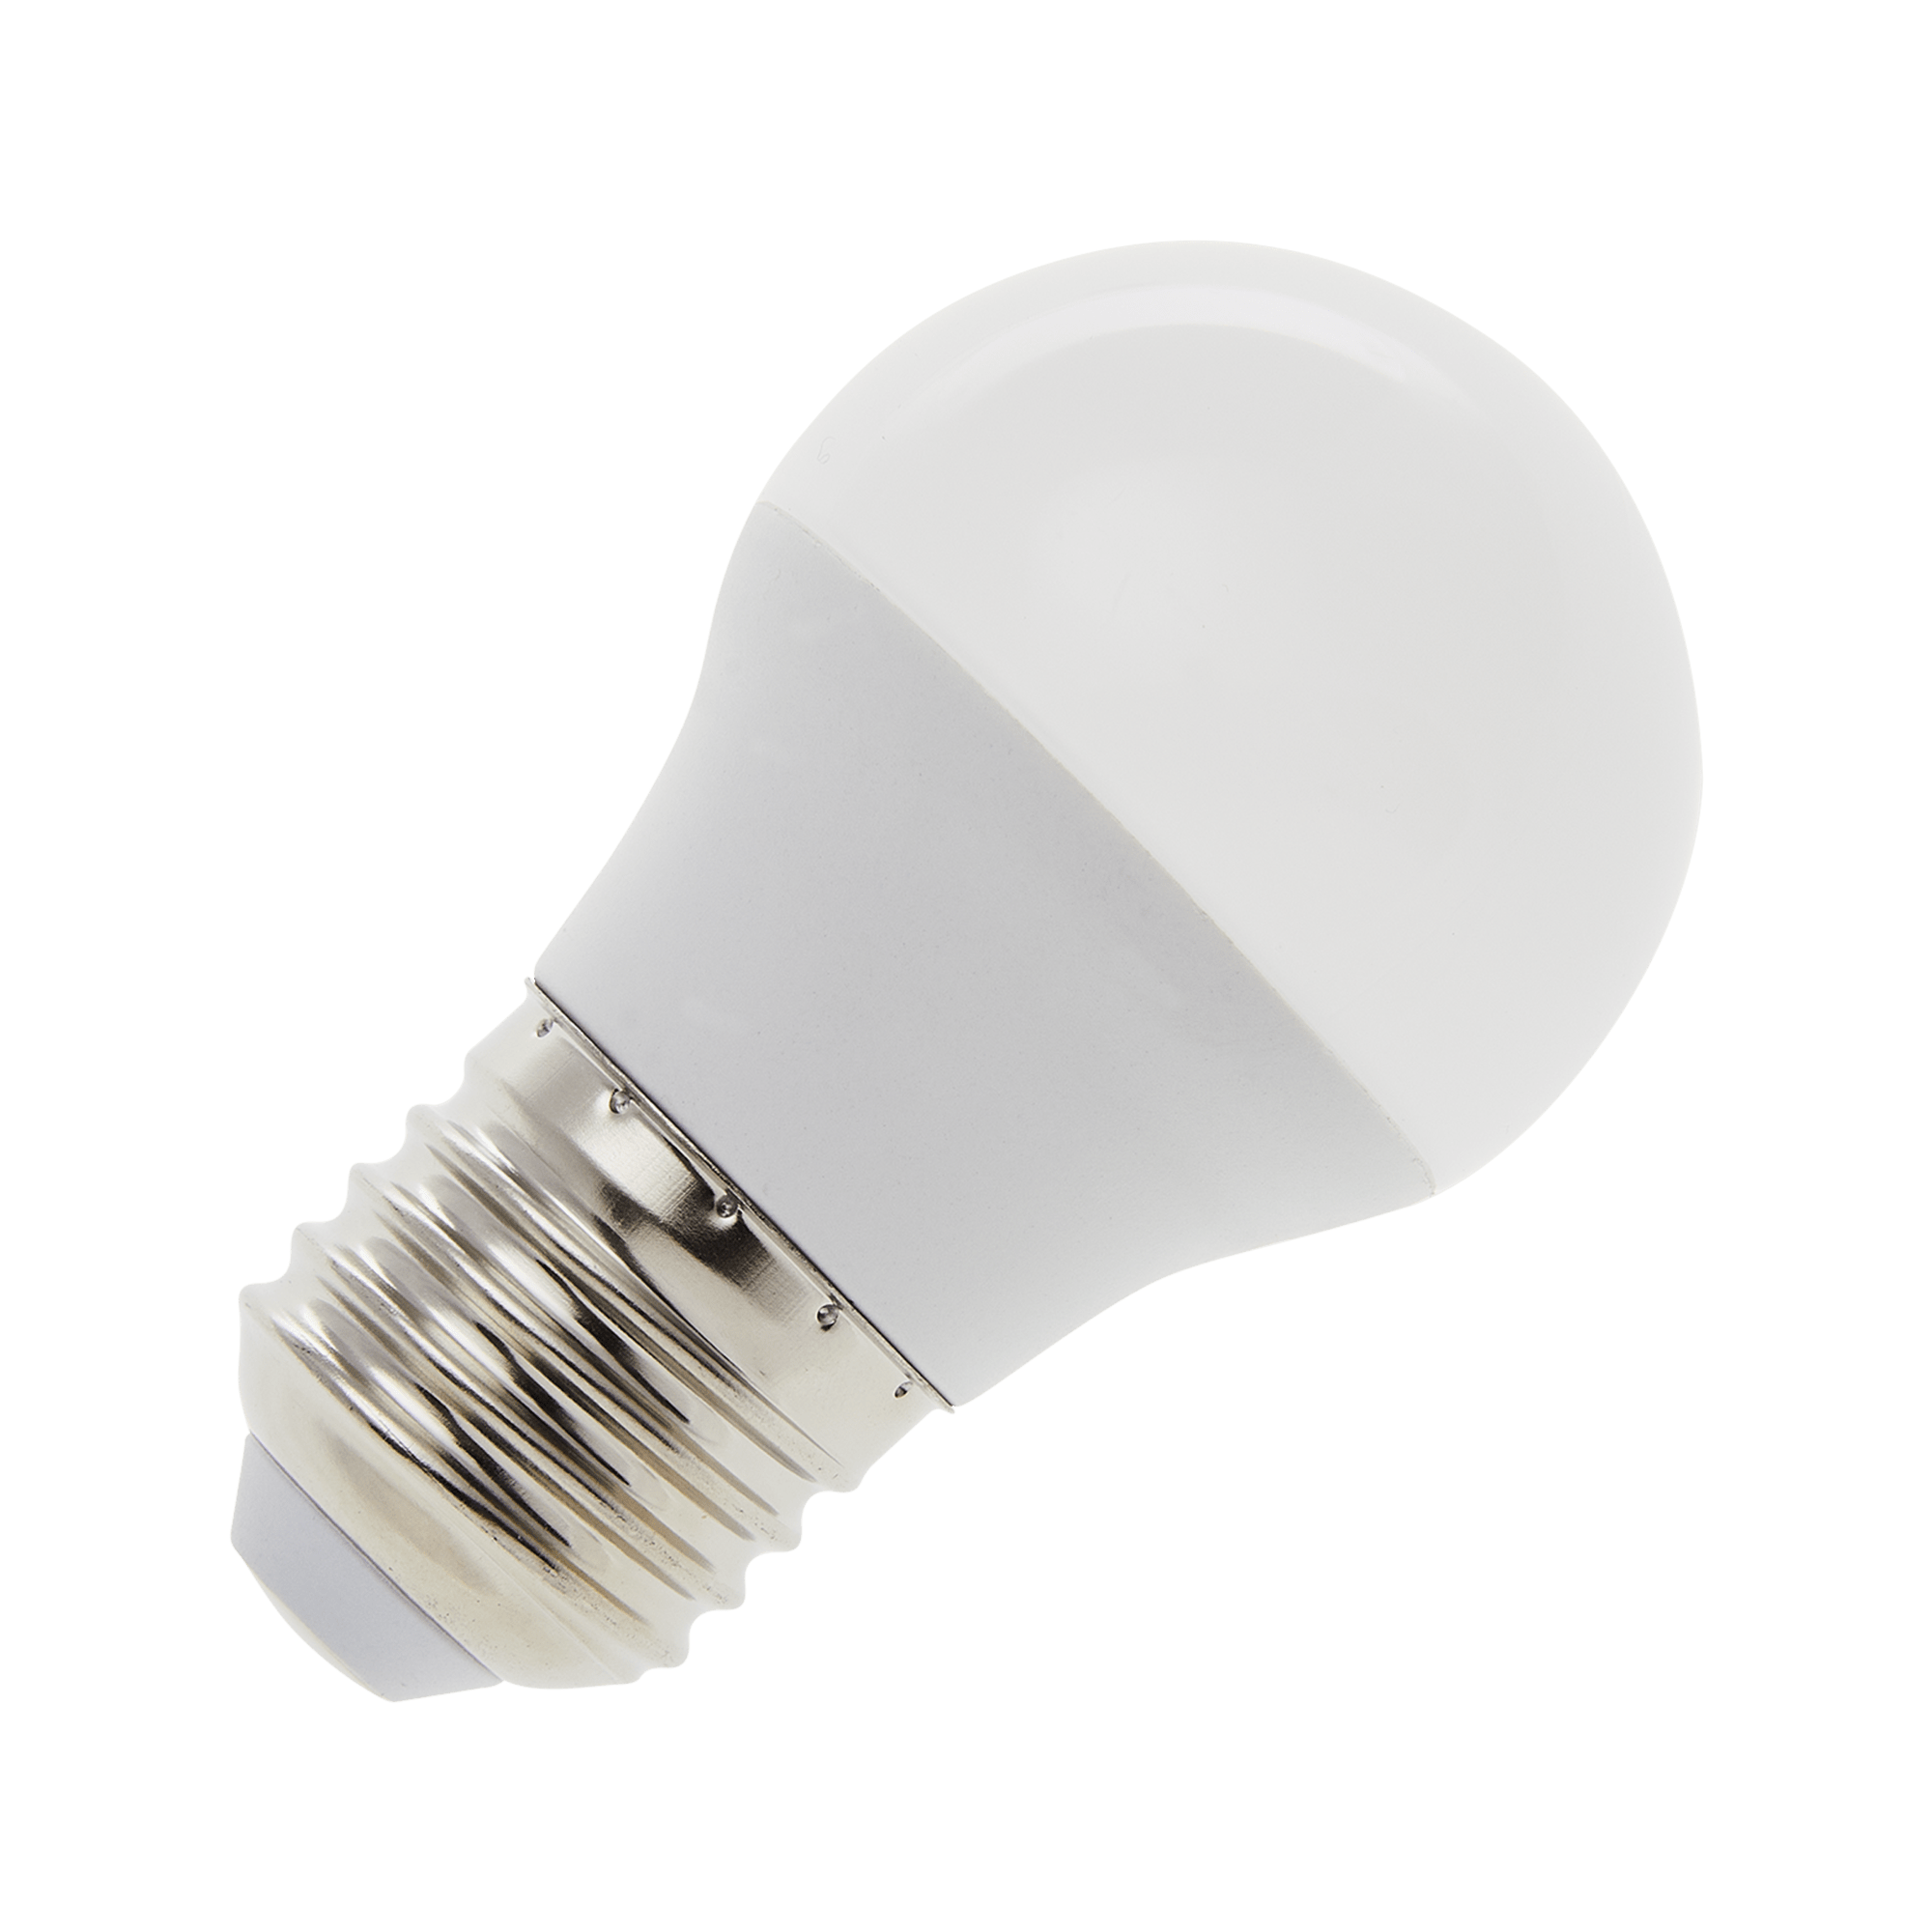 Lighto | LED Kogellamp | Grote fitting E27 | 3W (vervangt 25W)